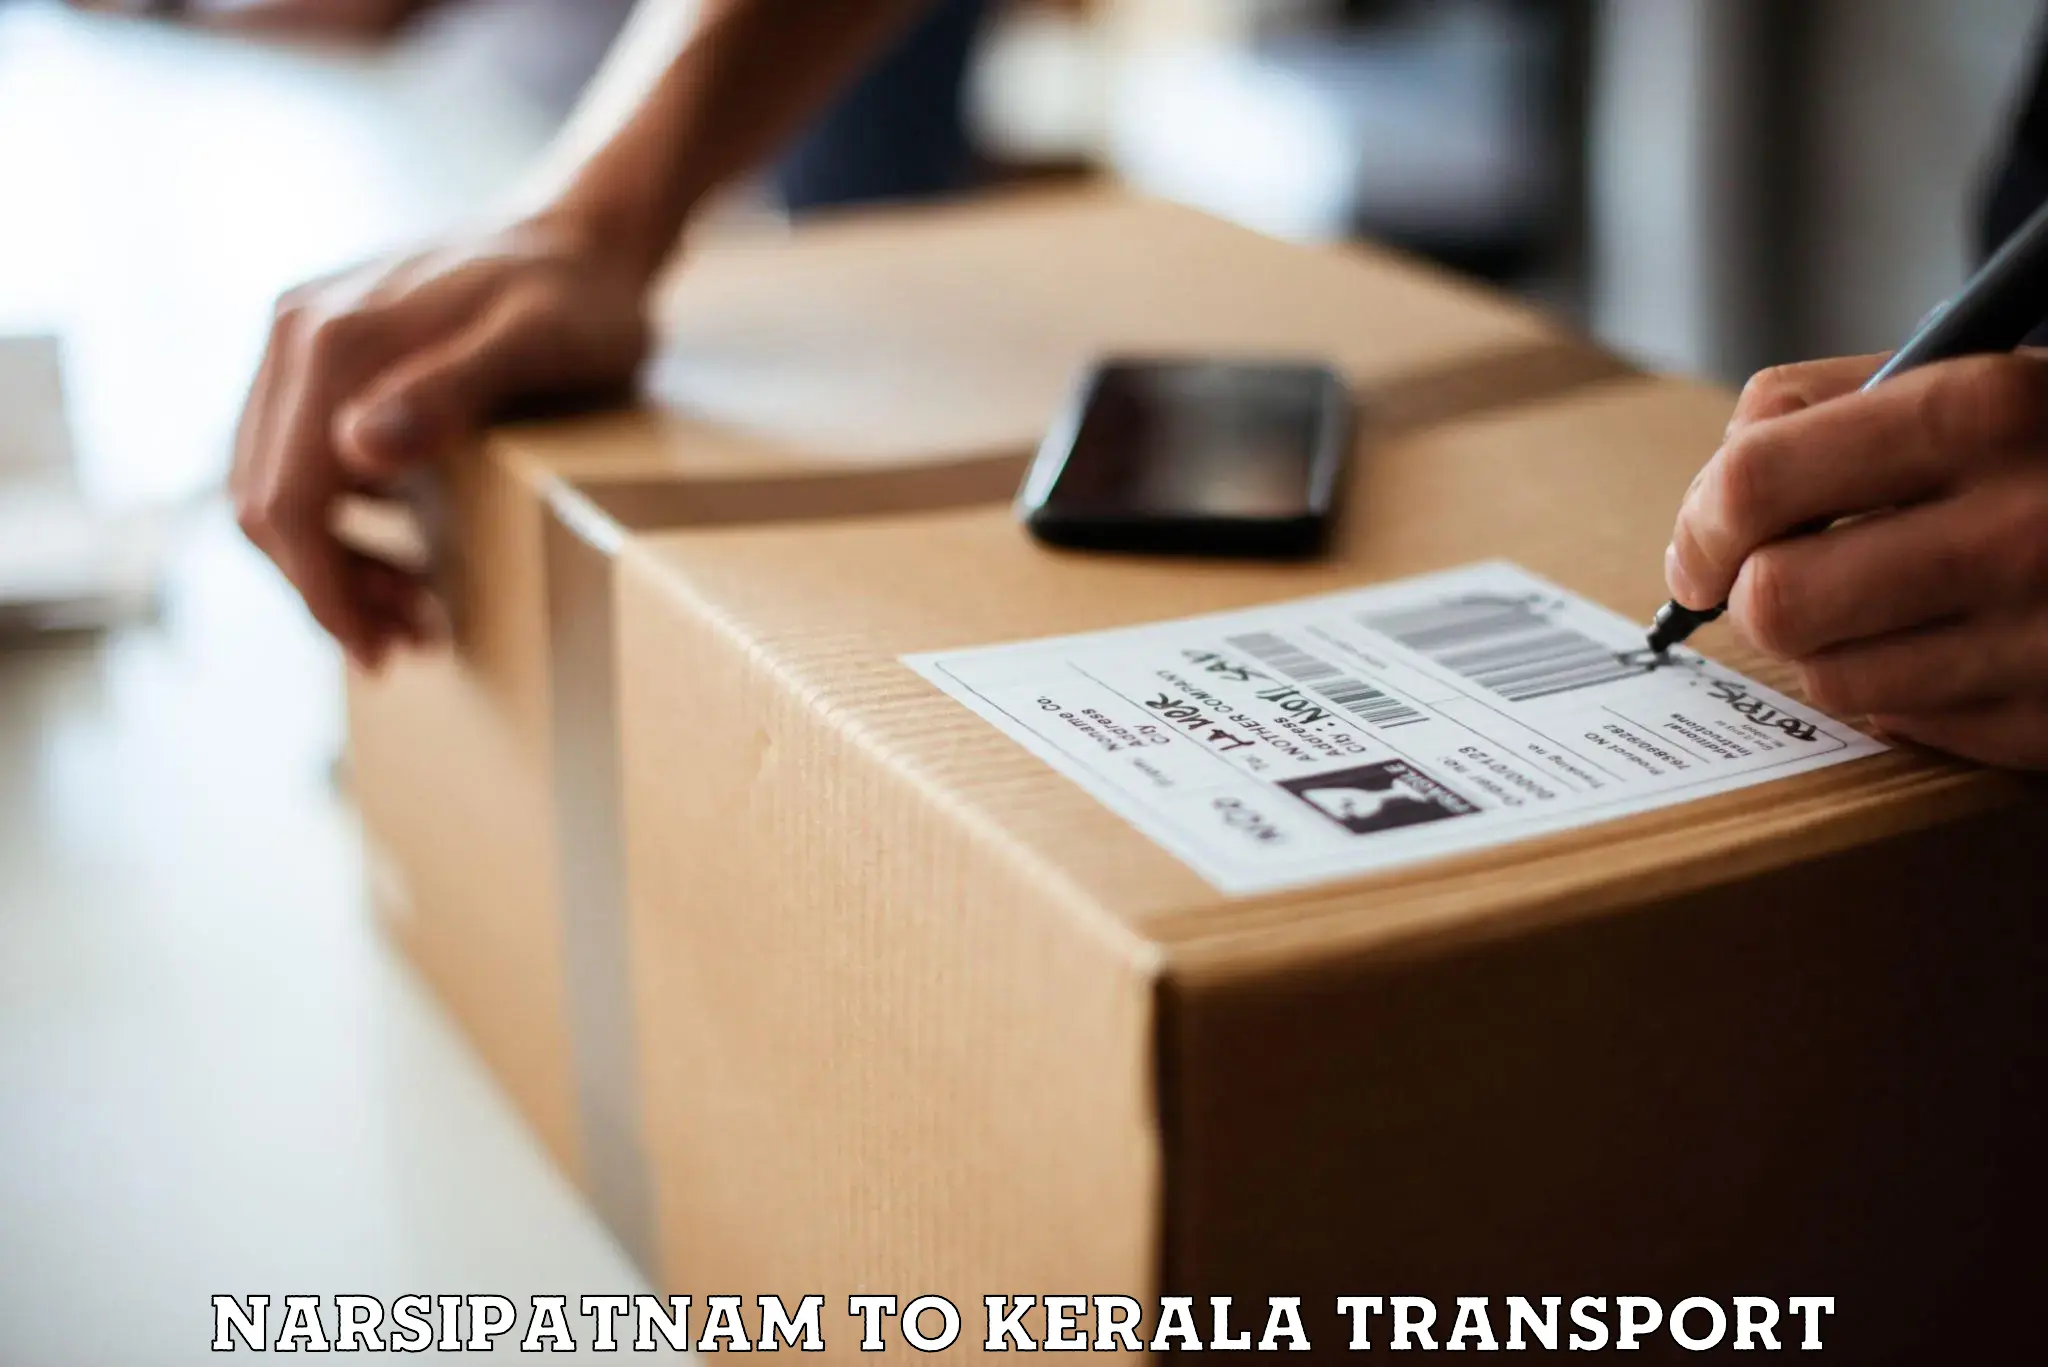 Express transport services in Narsipatnam to Koothattukulam